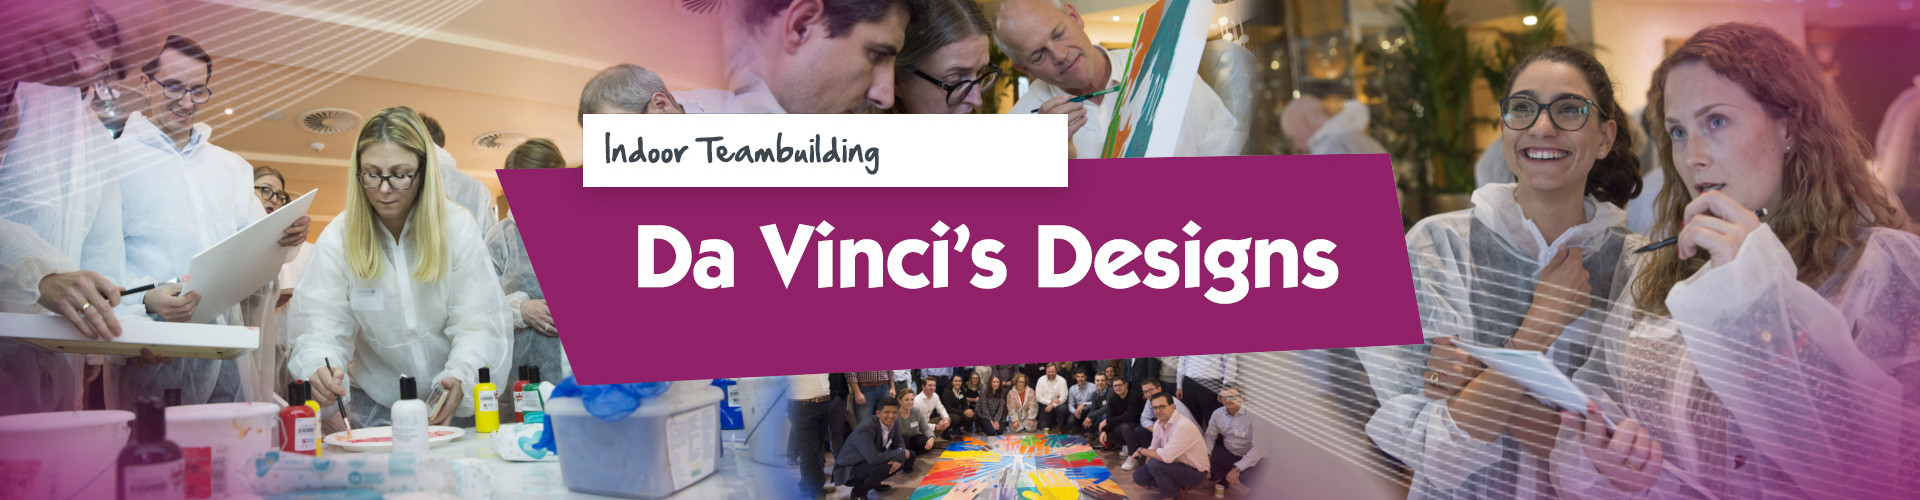 Da Vinci's Designs Banner